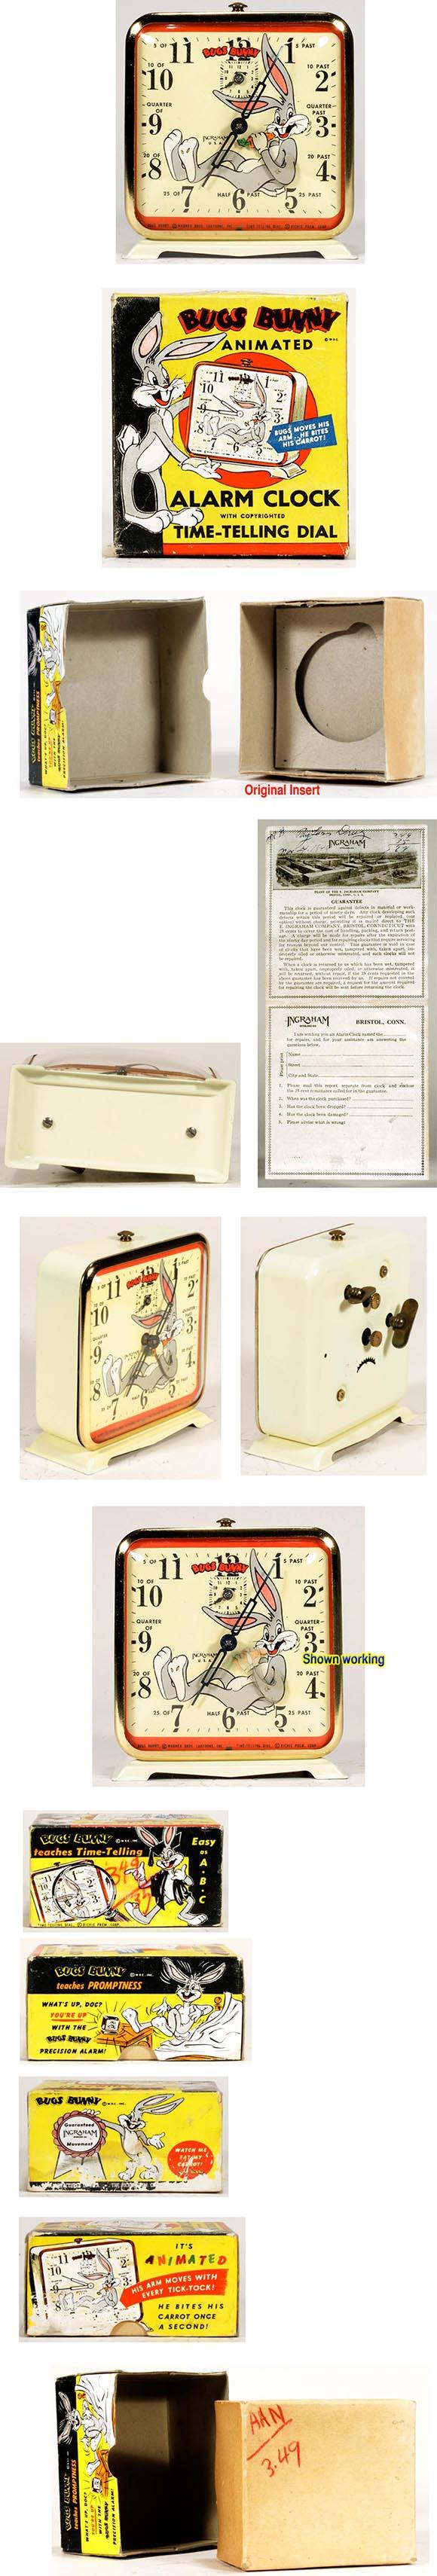 1949 Ingraham, Bugs Bunny Animated Clock in Original Box